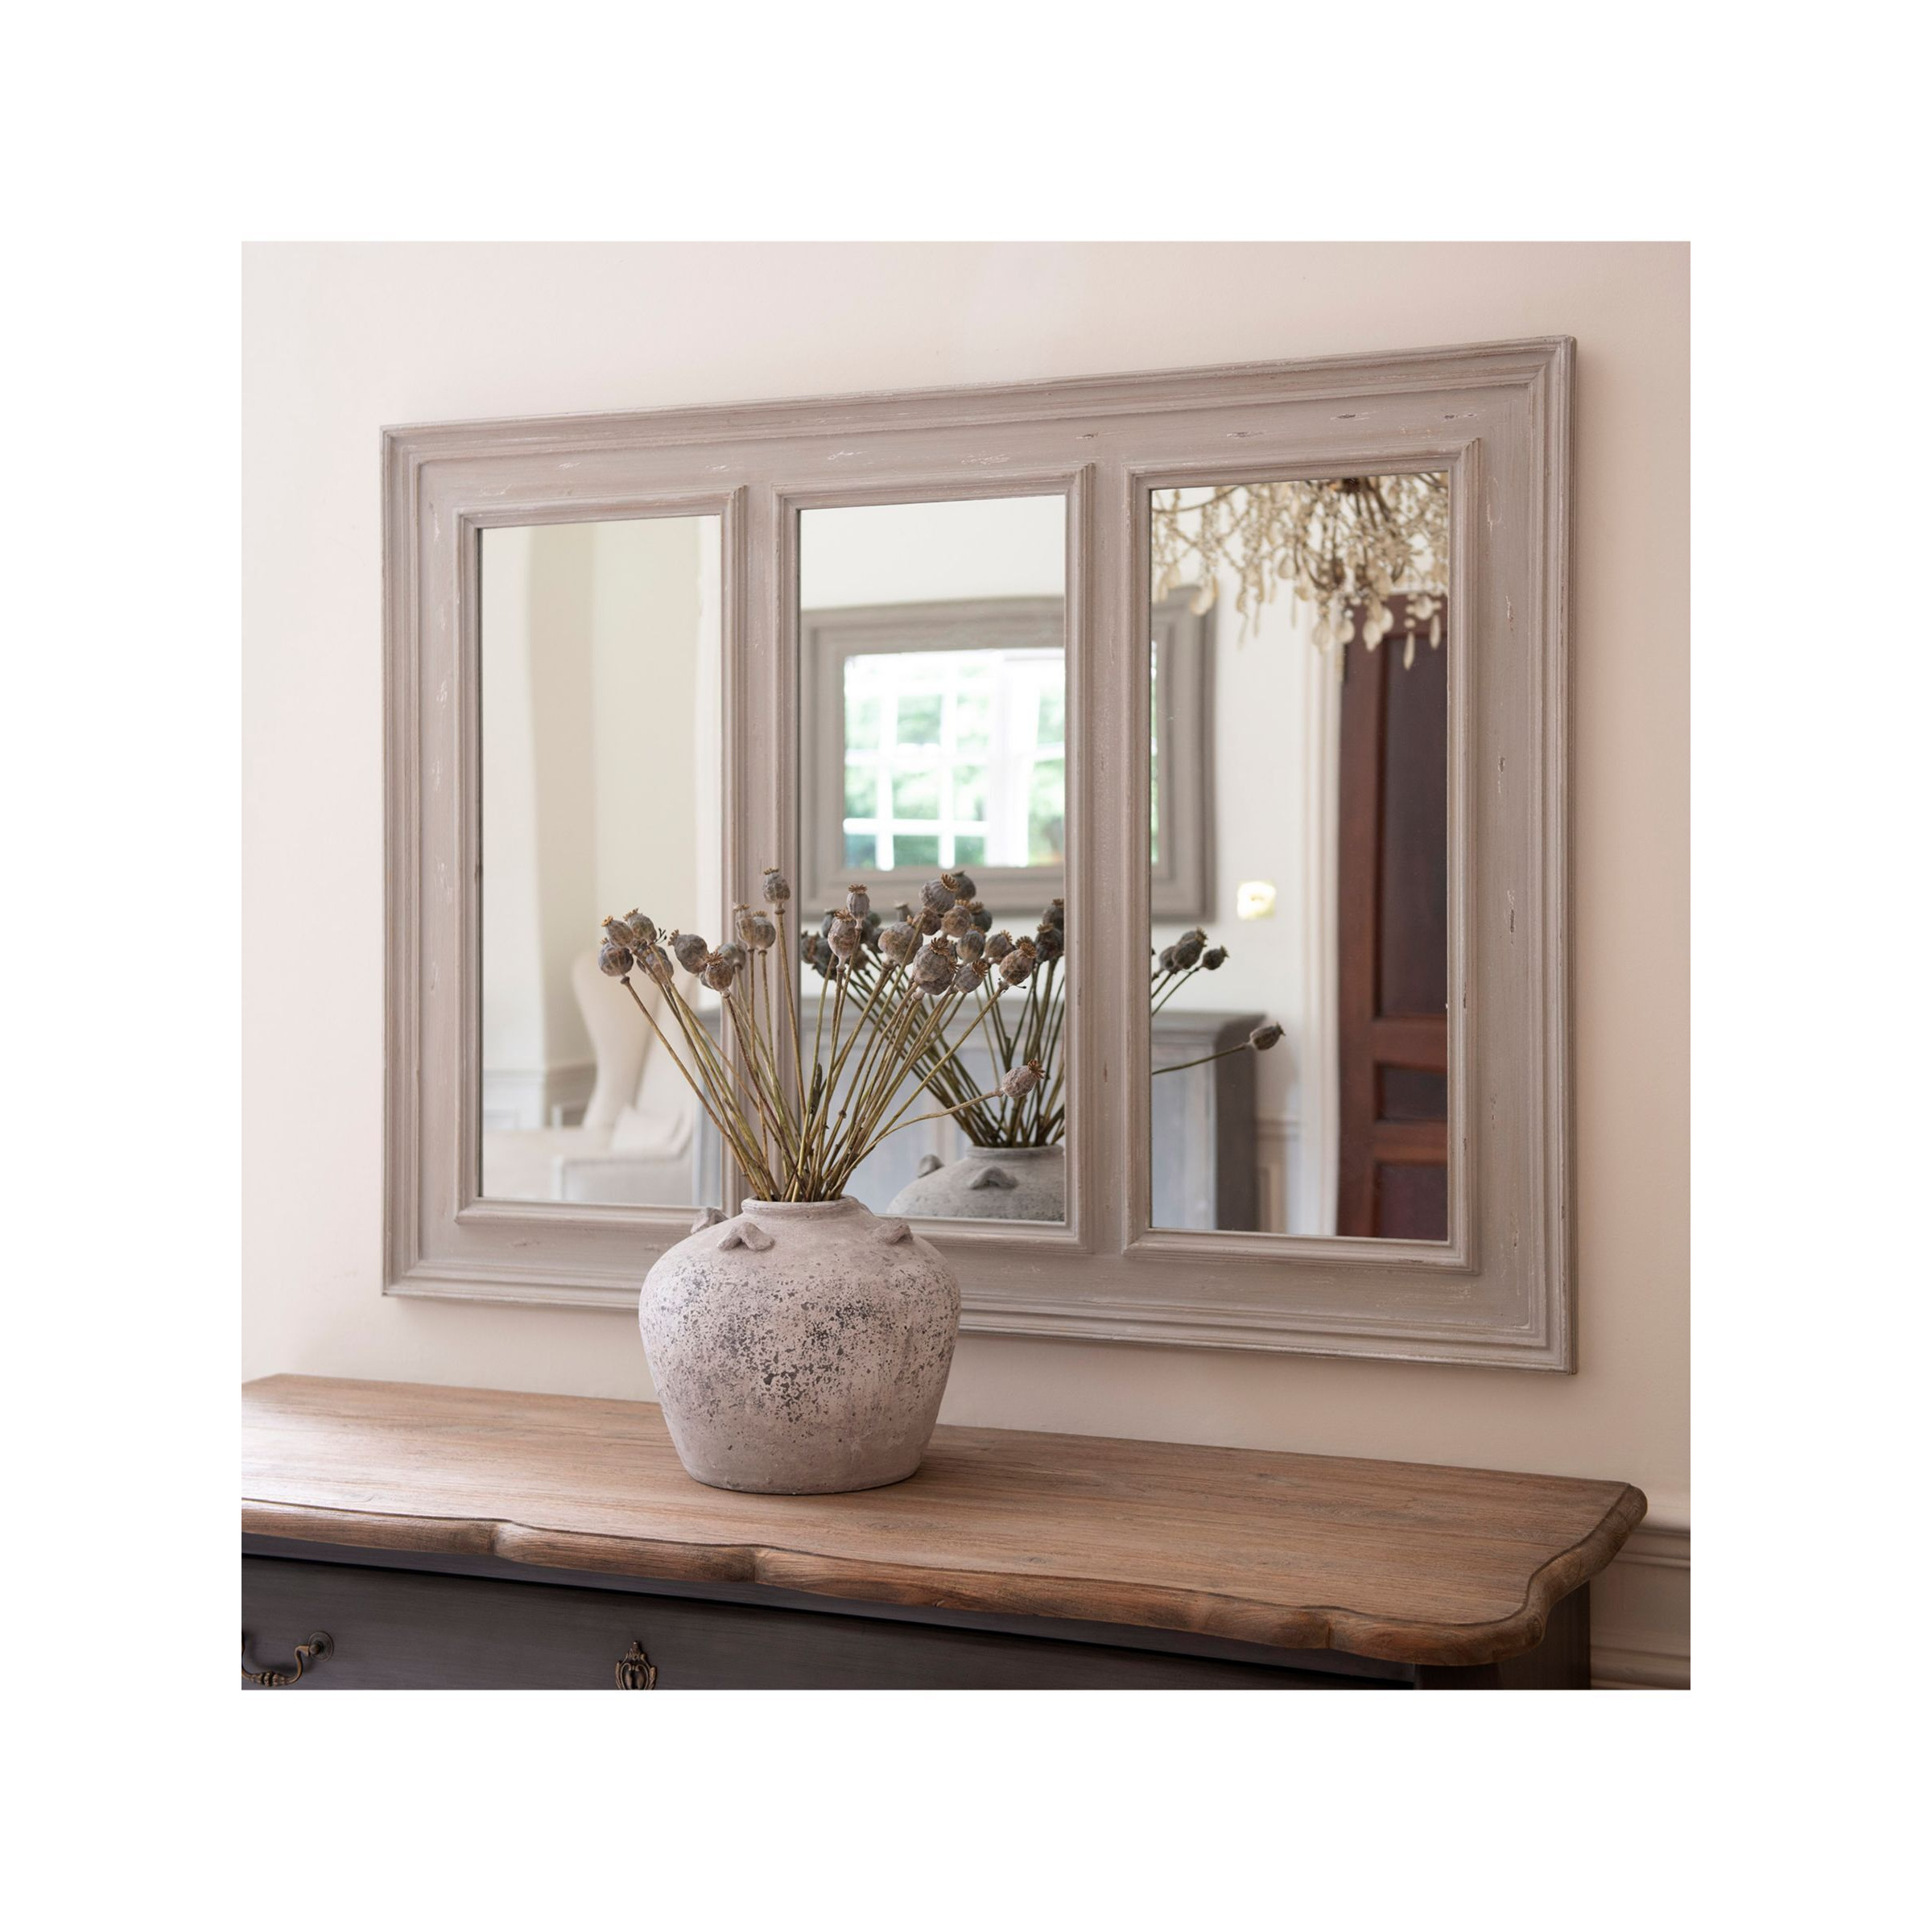 One.World Wilton Elise Rectangular Panelled Wood Wall Mirror, 103 x 139cm, White - image 1